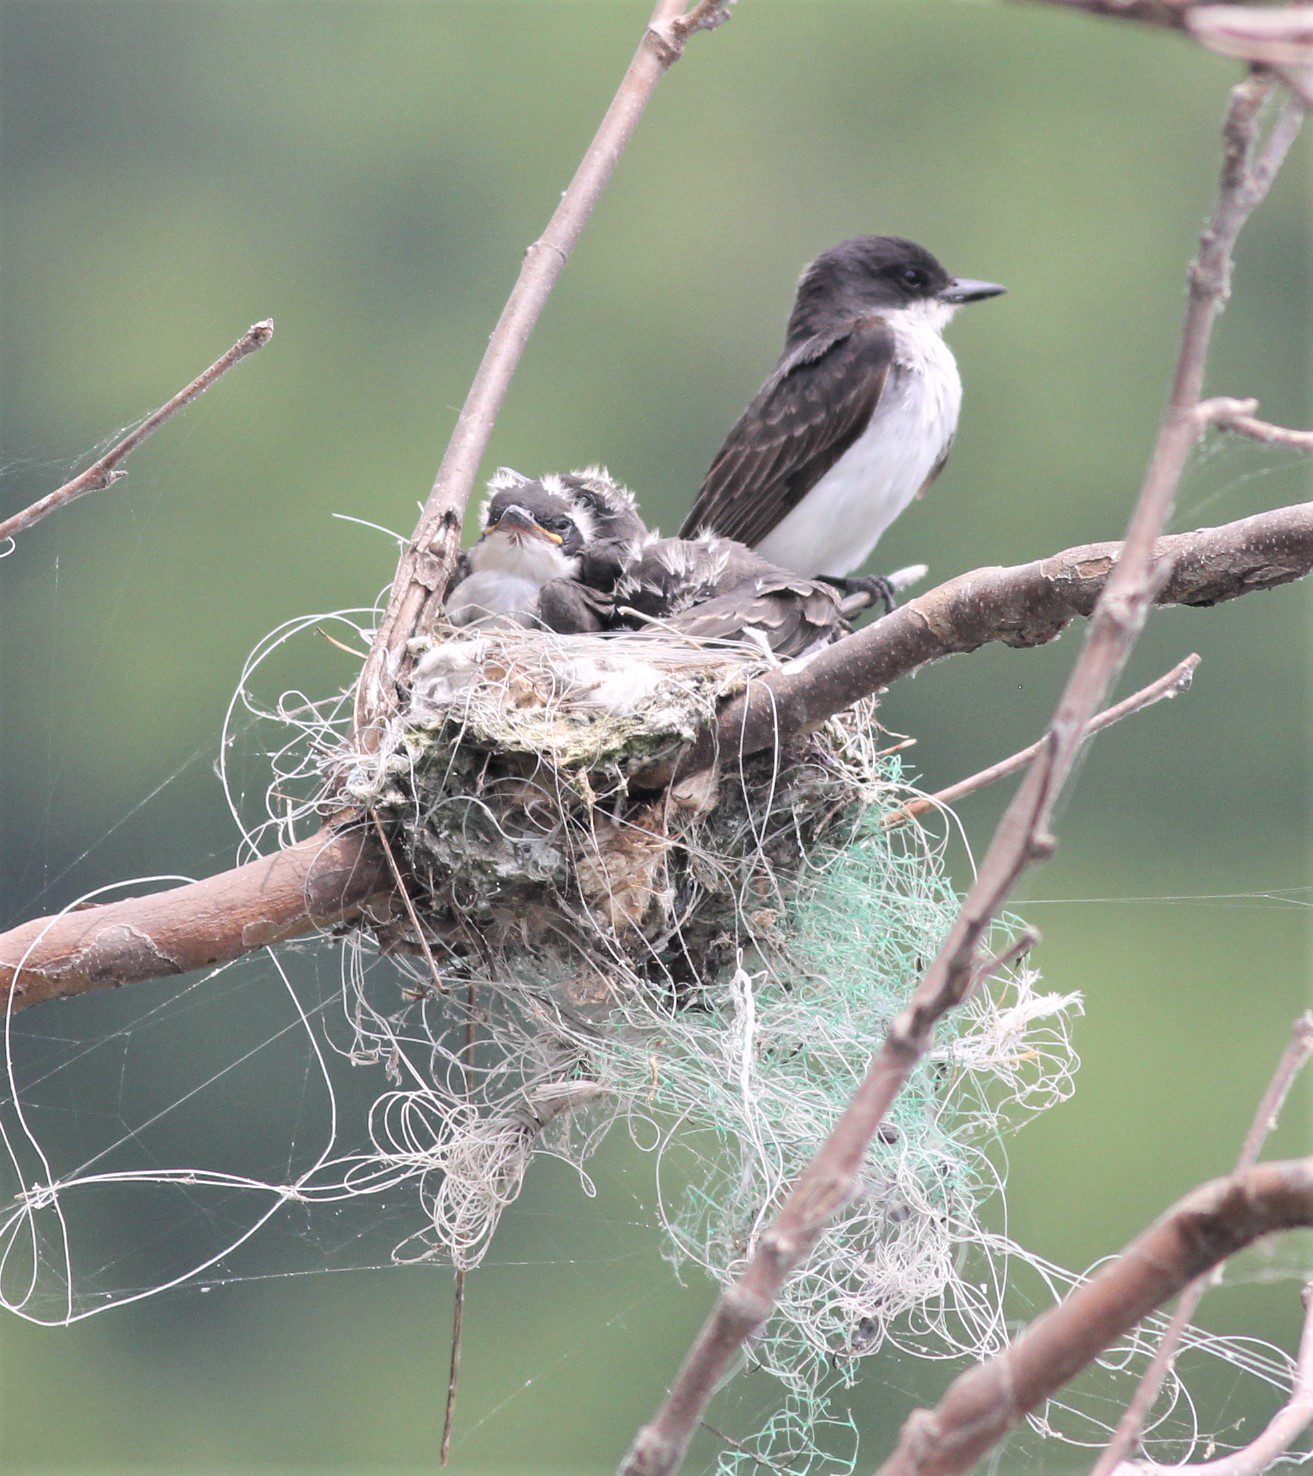 les-winkelers-wings-wildlife-kingsbird-nest-crab-orchard-national-wildlife-refuge-illinois